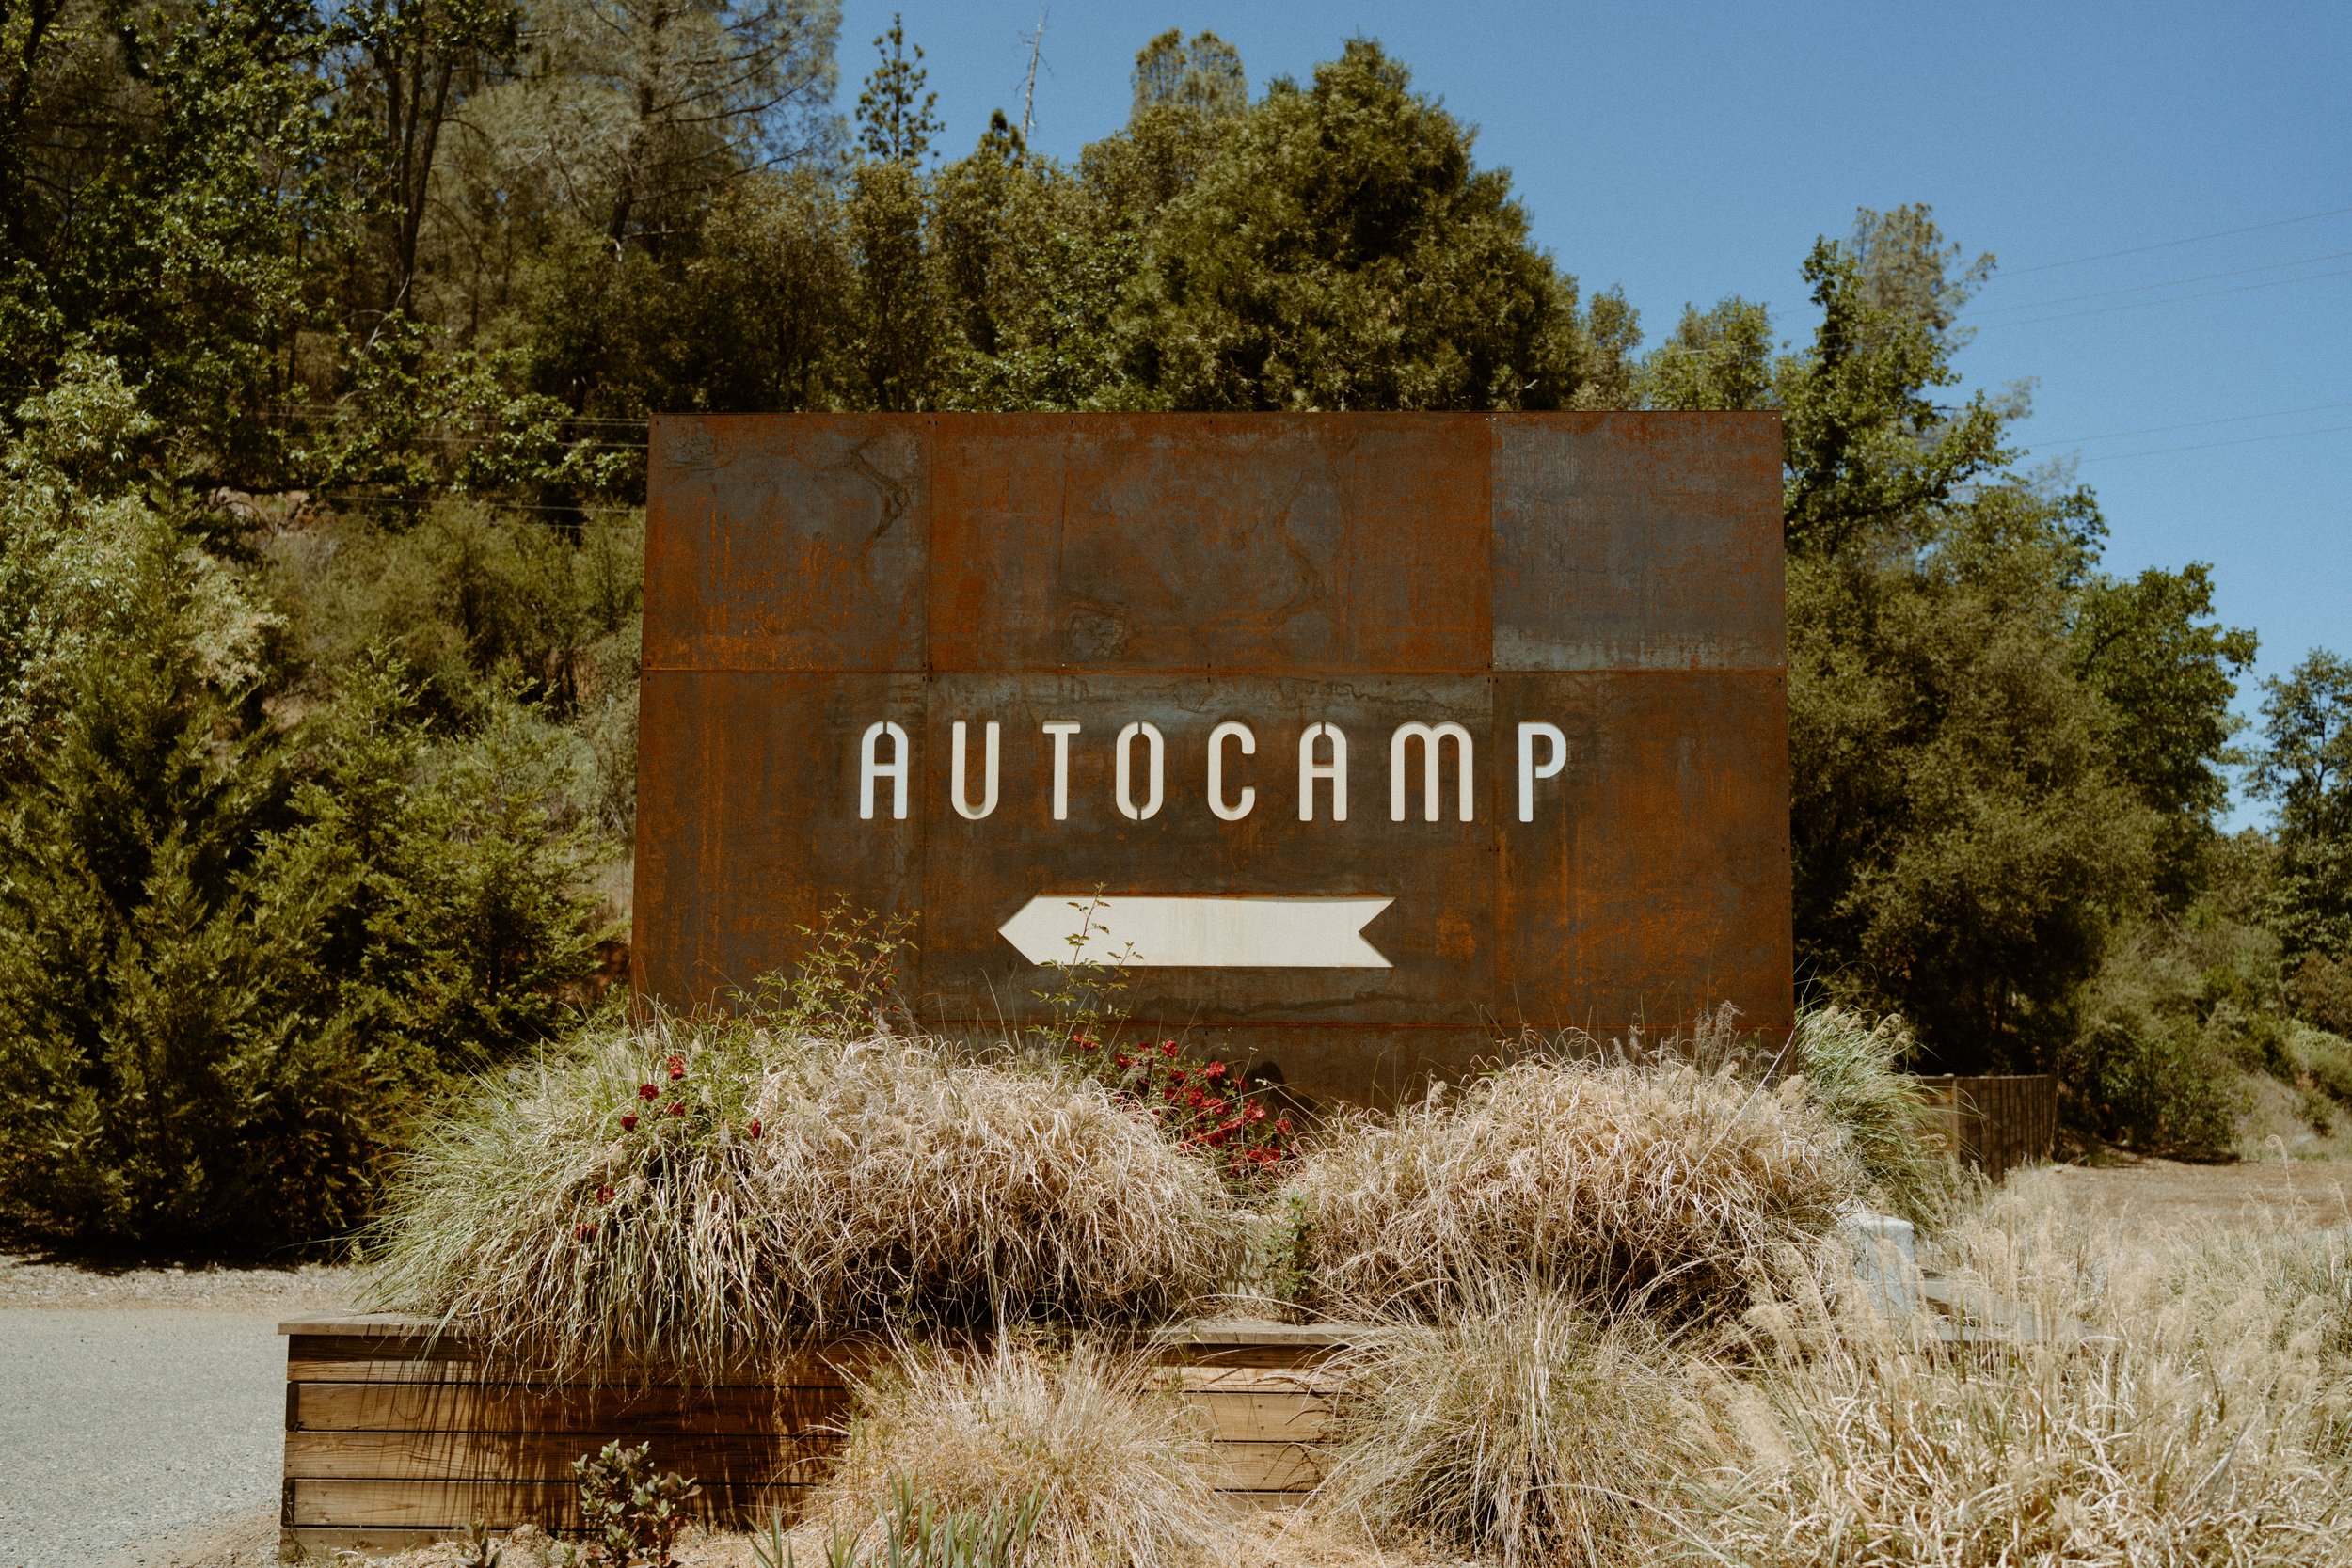 Autocamp Yosemite California